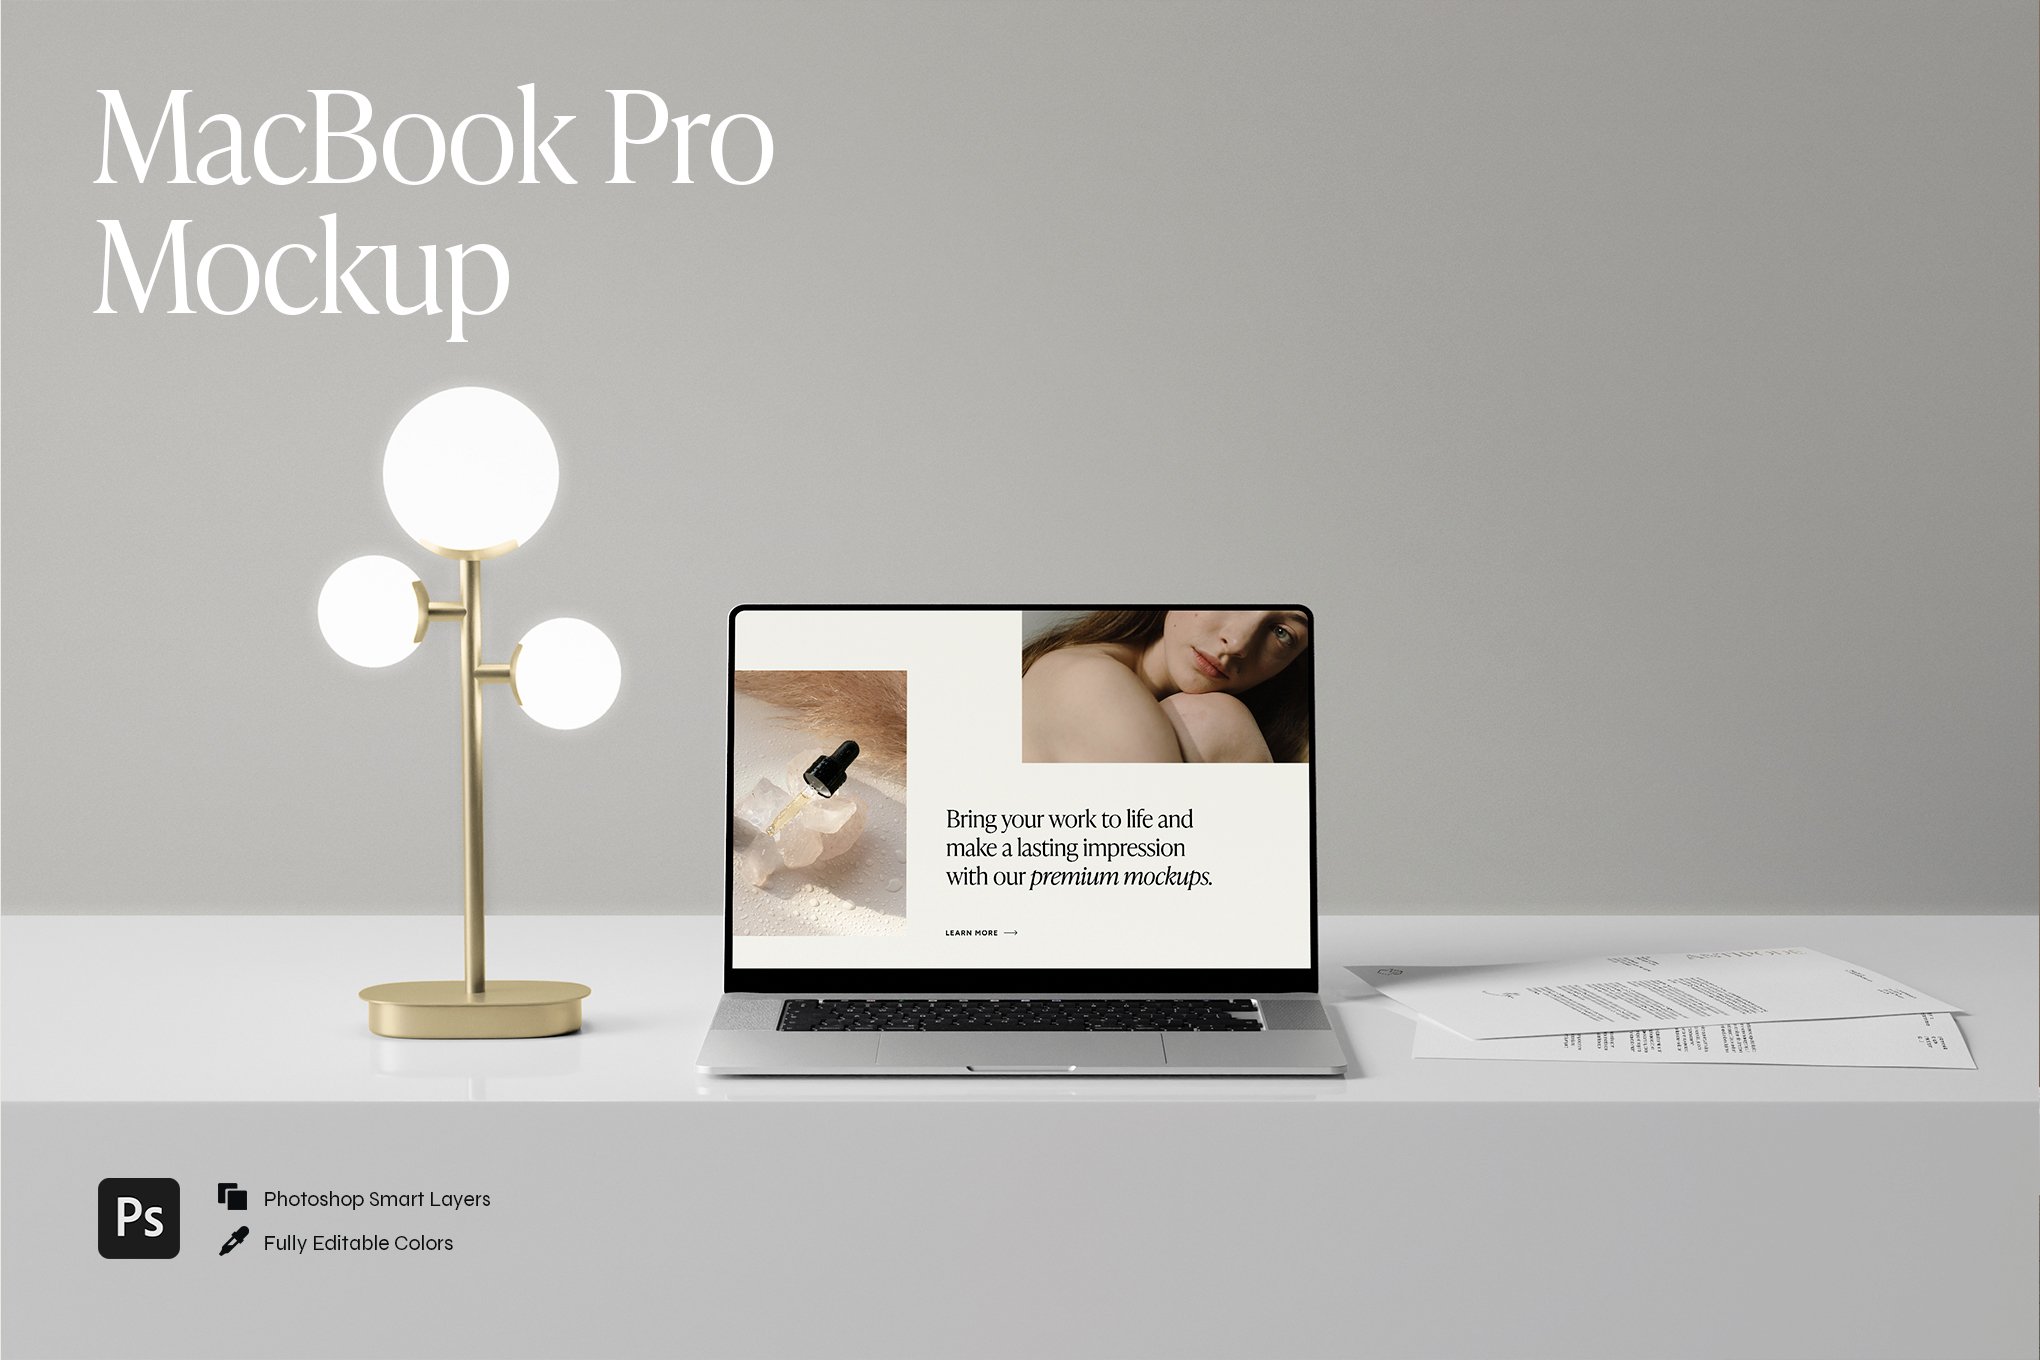 MacBook Pro Mockup 01 cover image.